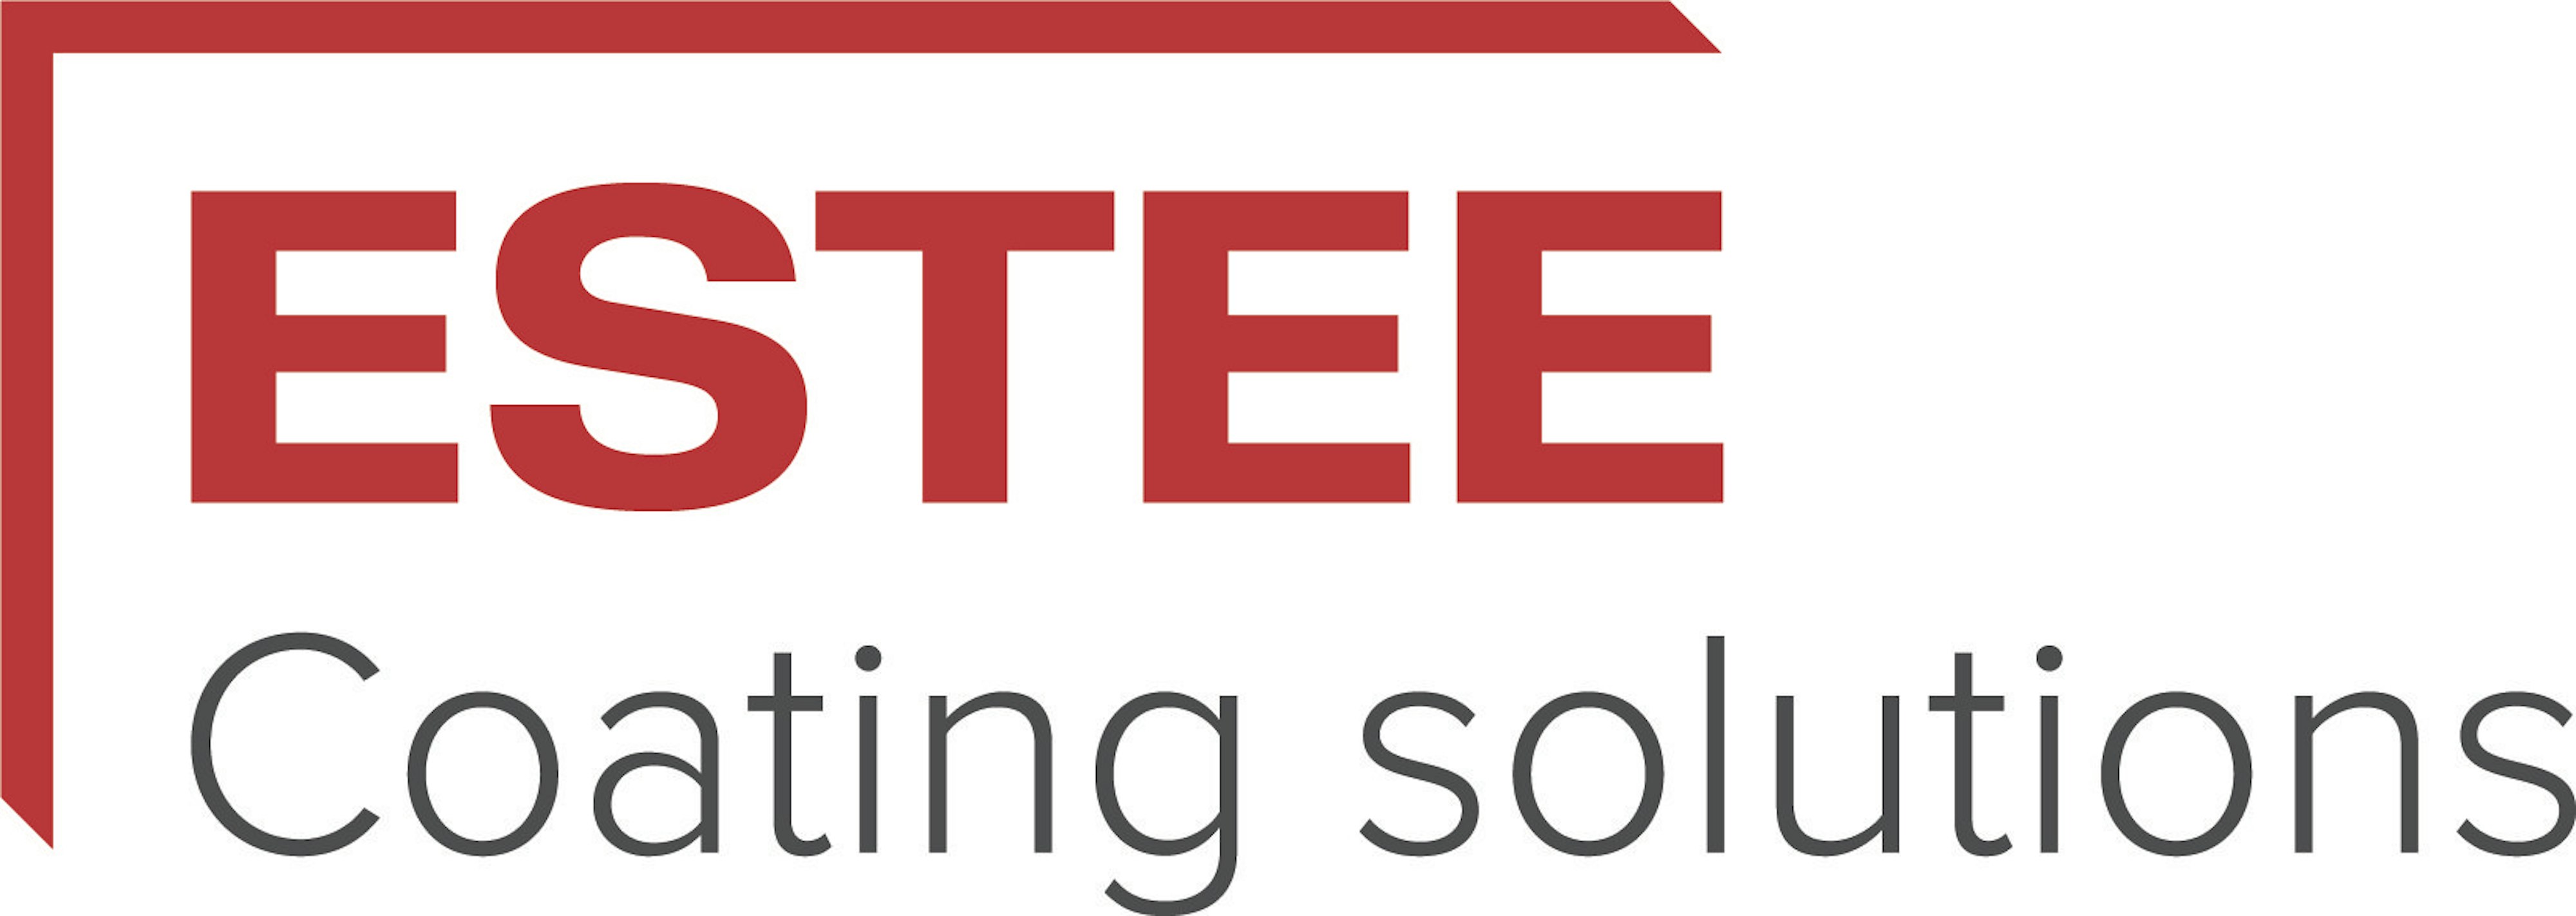 ESTEE Coating Solutions logo